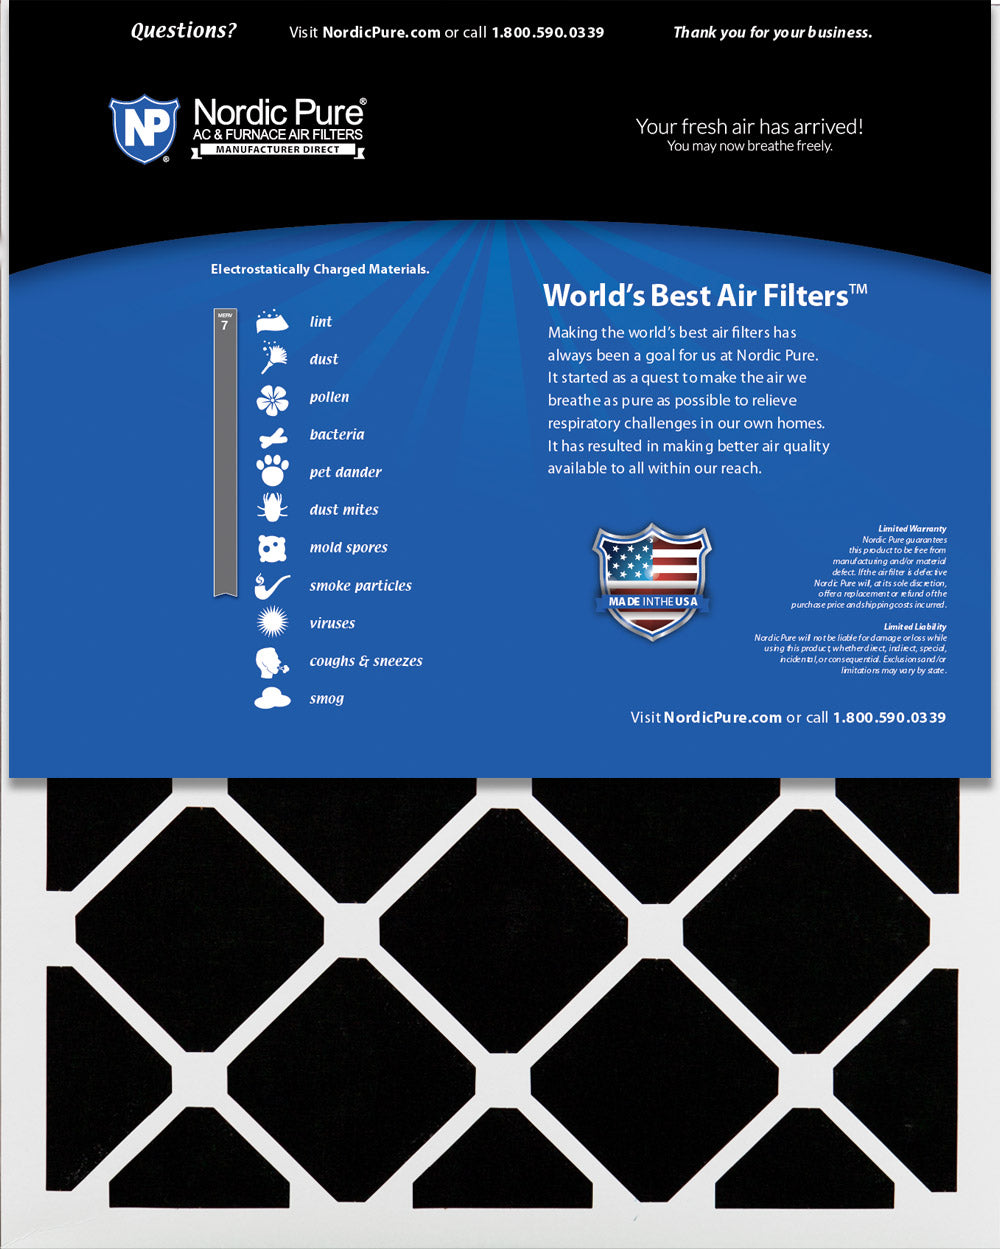 8x10x1 Exact MERV 7 Plus Carbon AC Furnace Filters